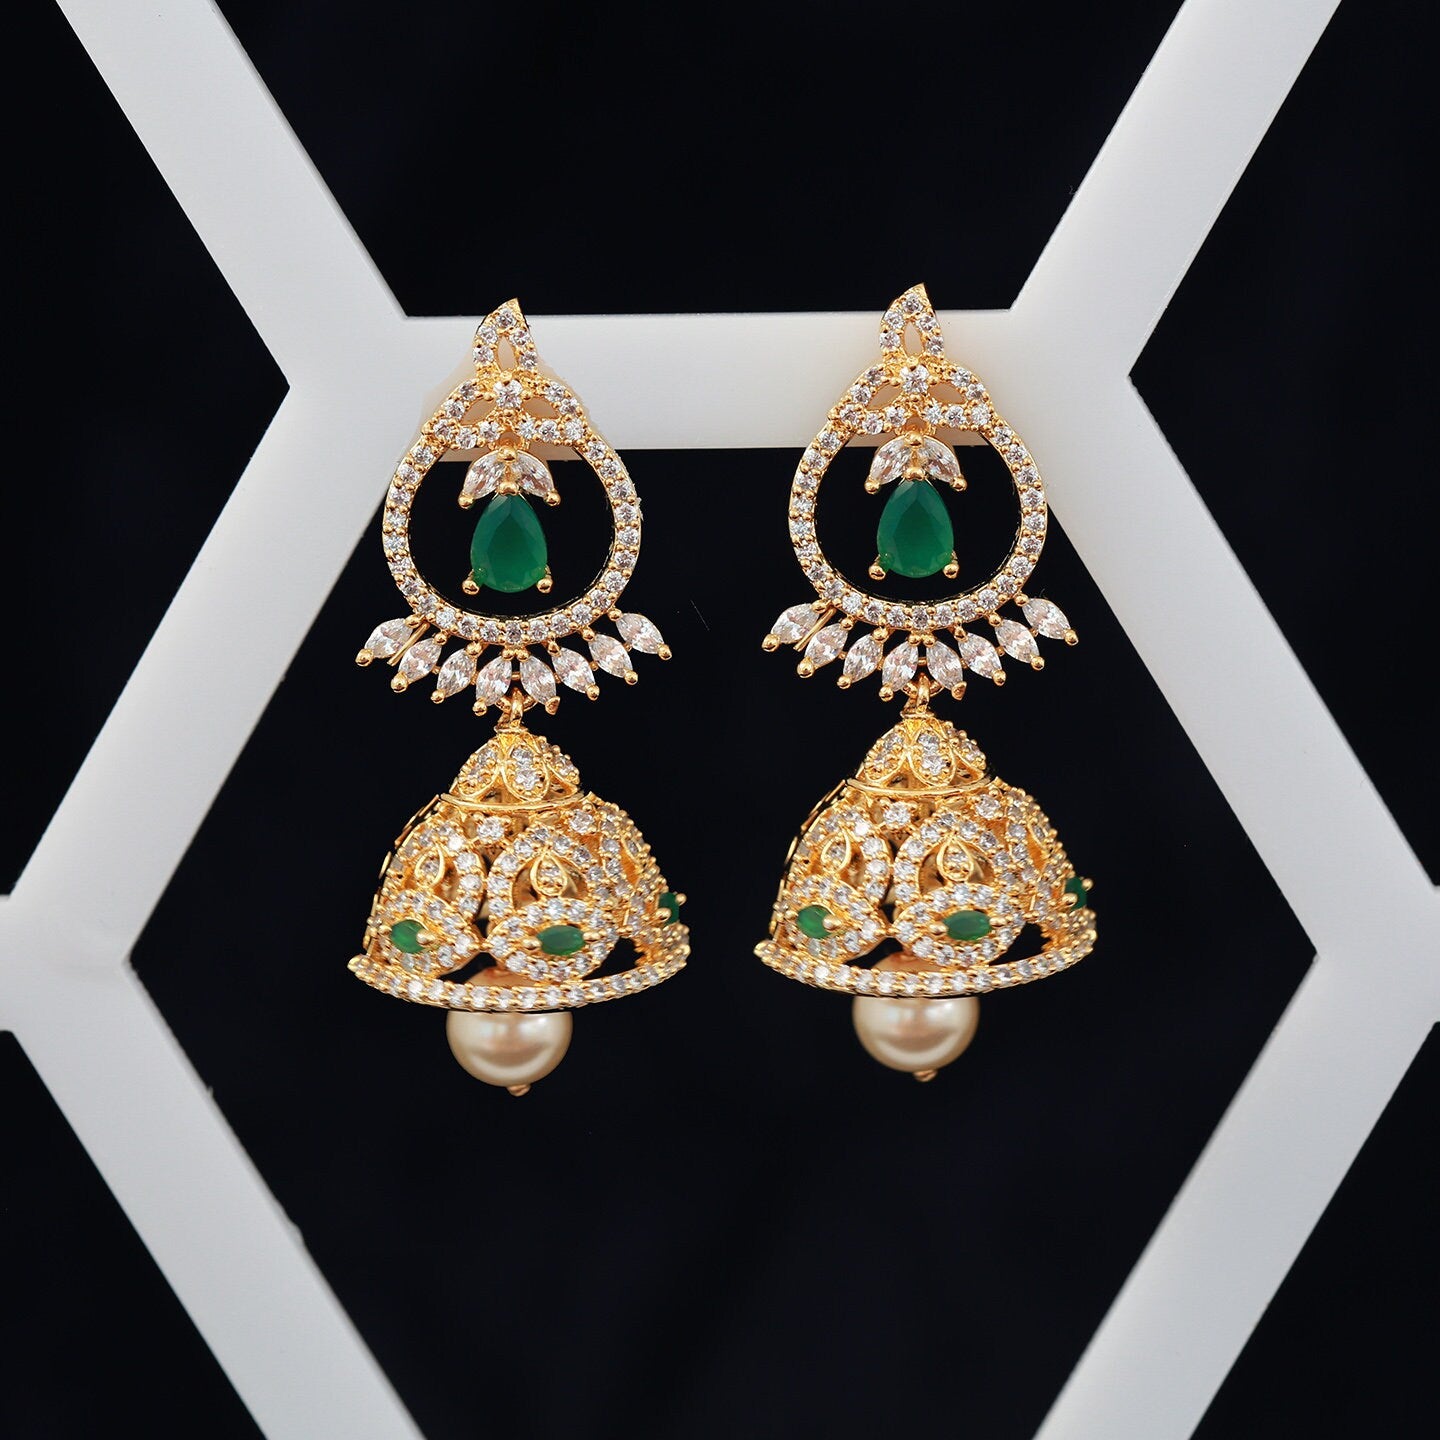 Buy 250+ Designs Online | BlueStone.com - India's #1 Online Jewellery Brand